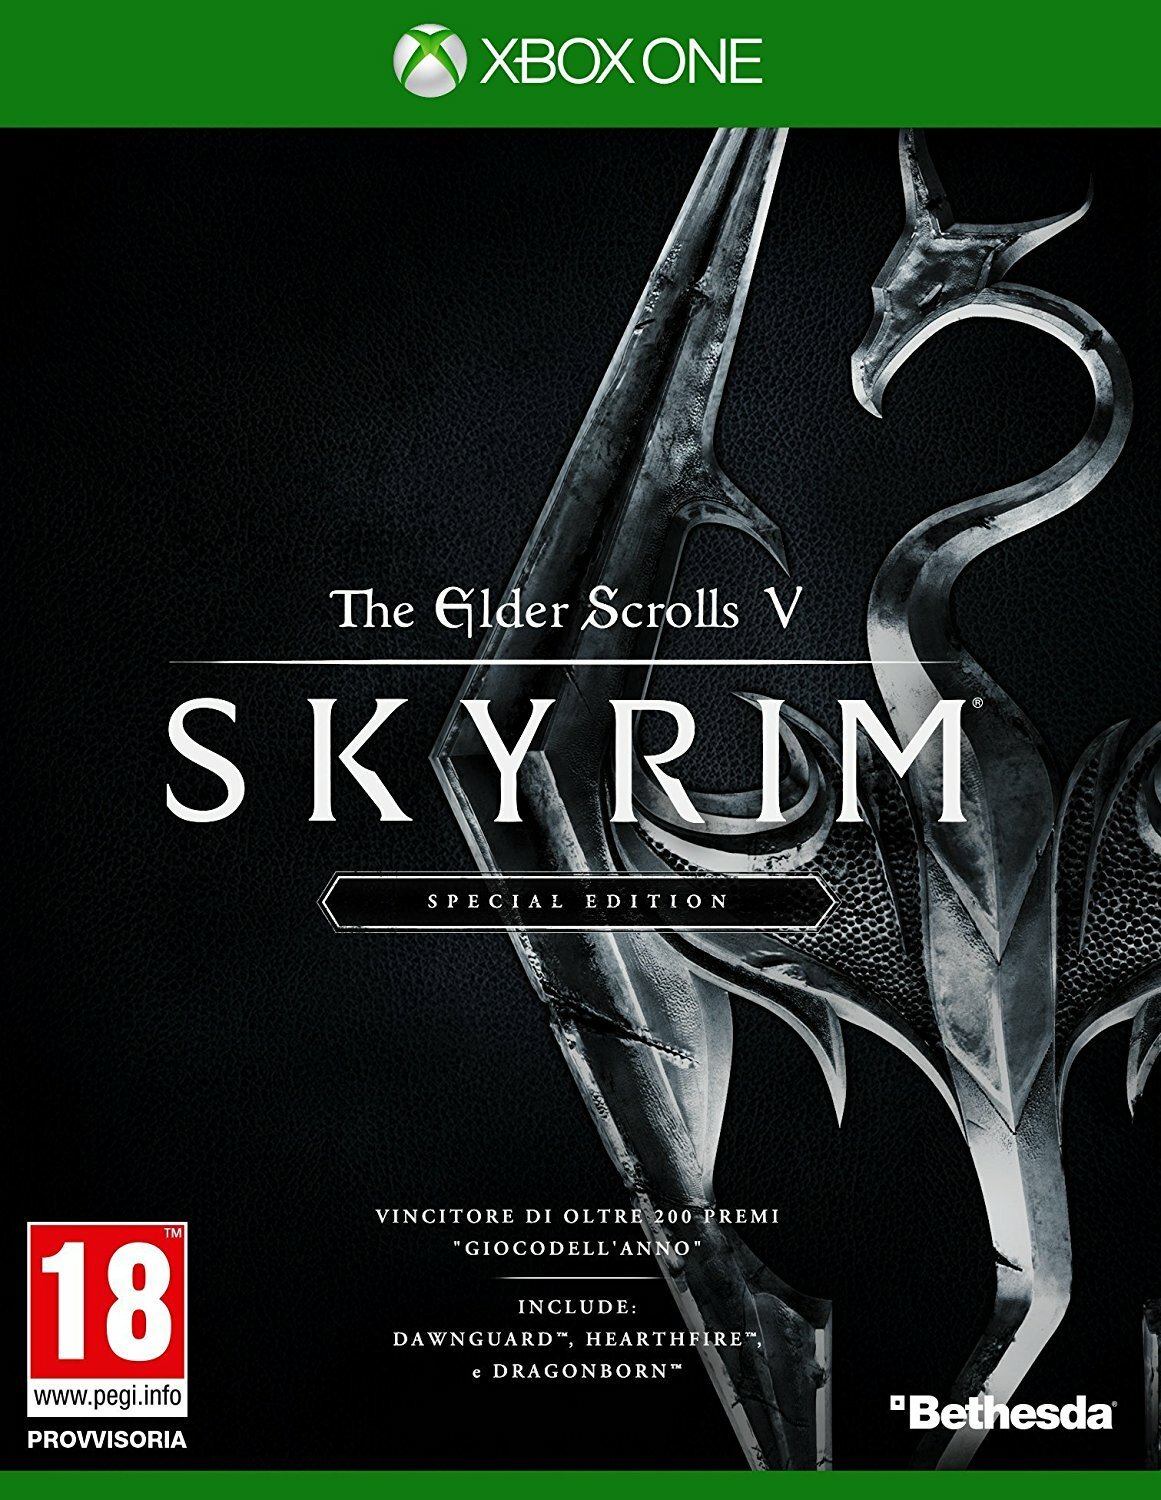  Skyrim in scontro per Xbox One, Packshot